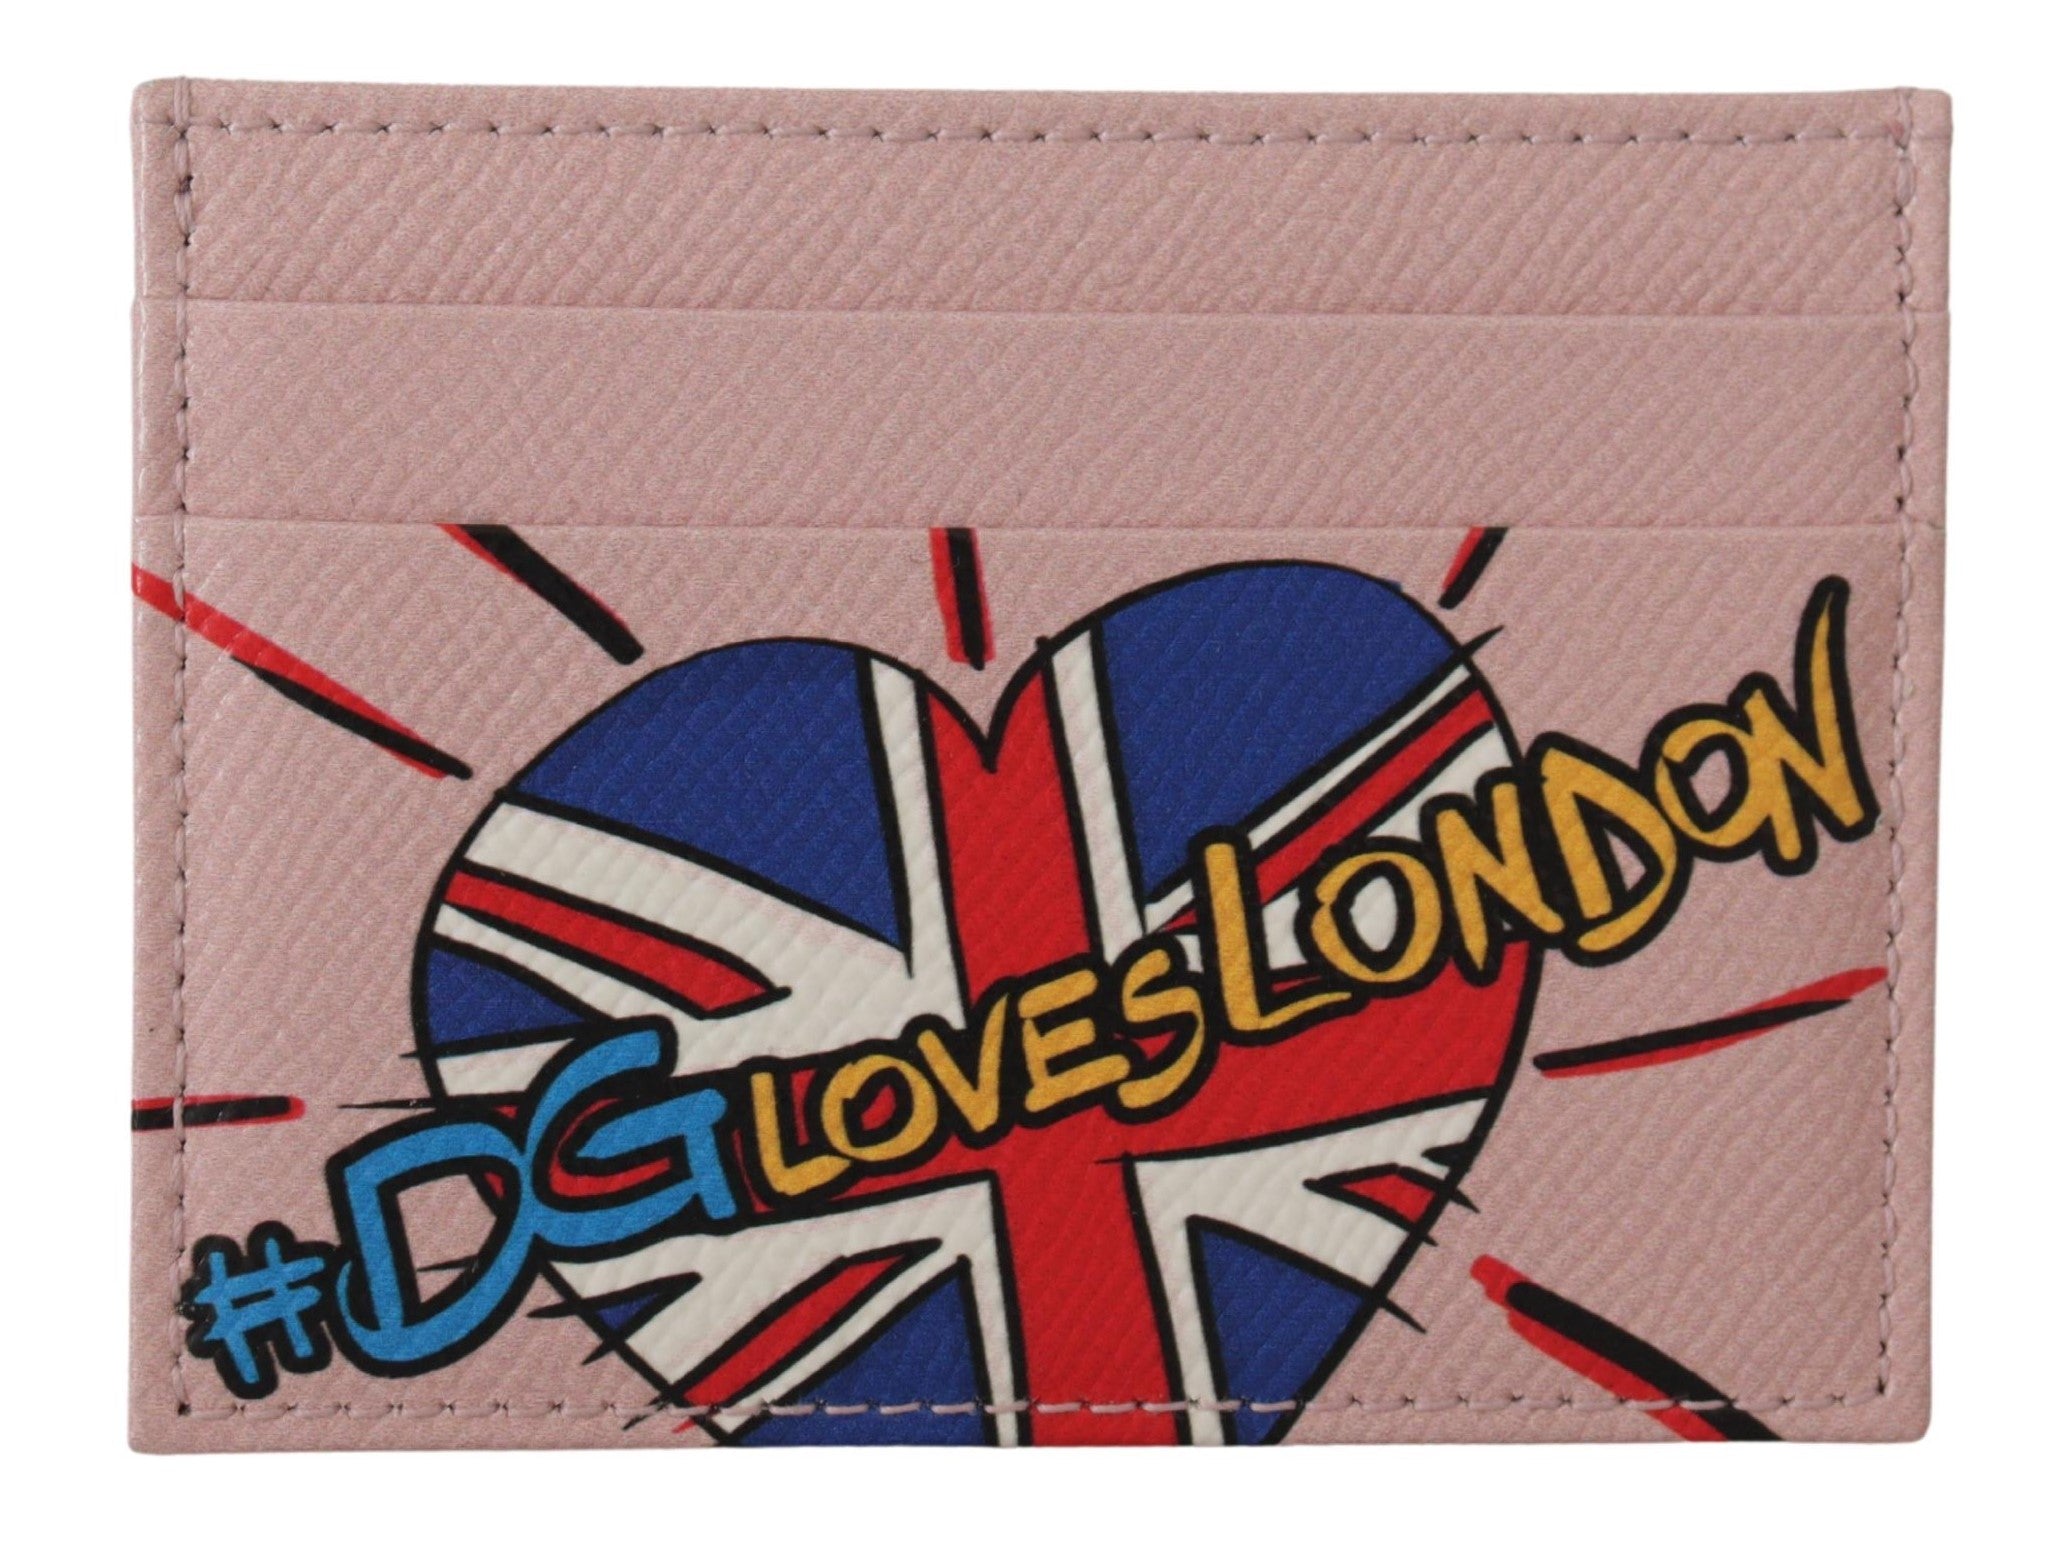 DOLCE & GABBANA Dolce & Gabbana Leather #DGLovesLondon Women Cardholder Case Women's Wallet